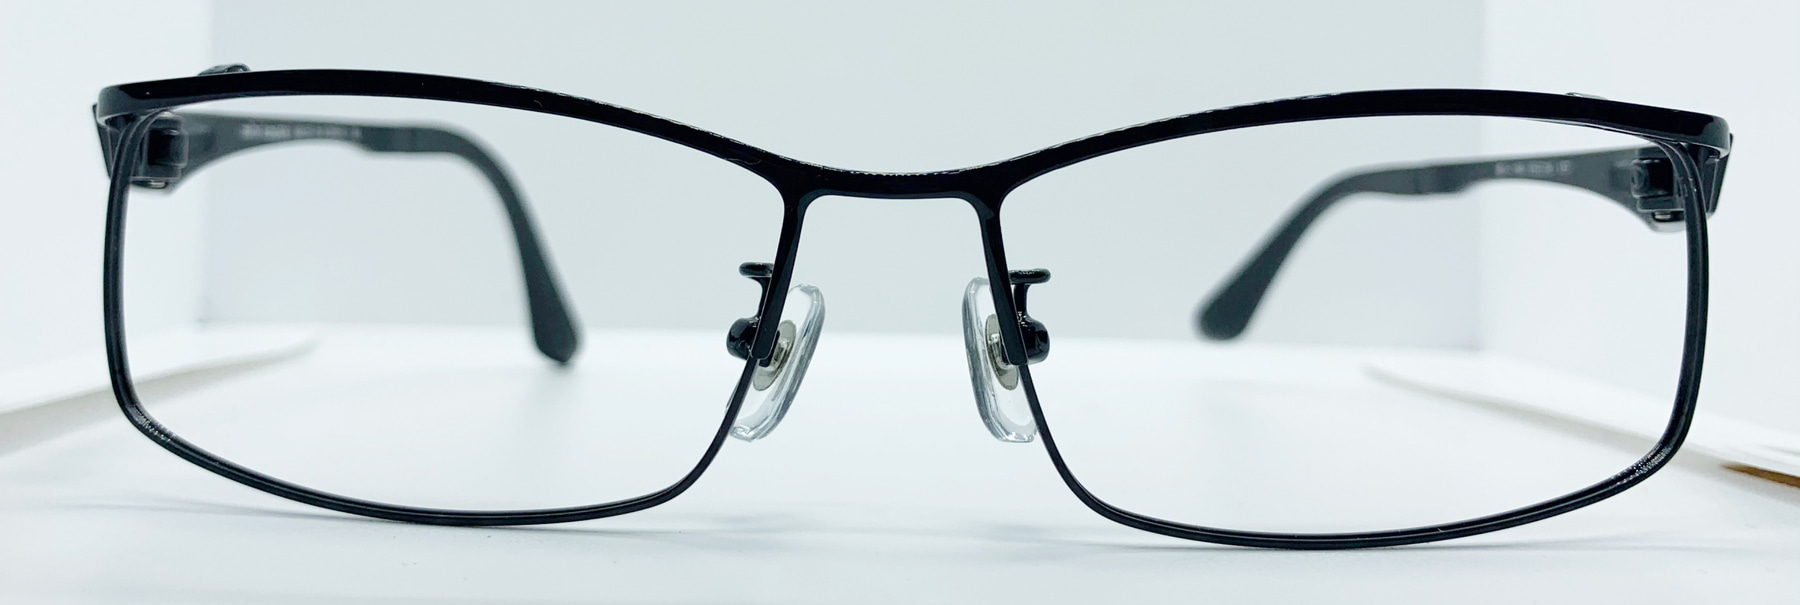 MINIHOUSE M-1194, Korean glasses, sunglasses, eyeglasses, glasses